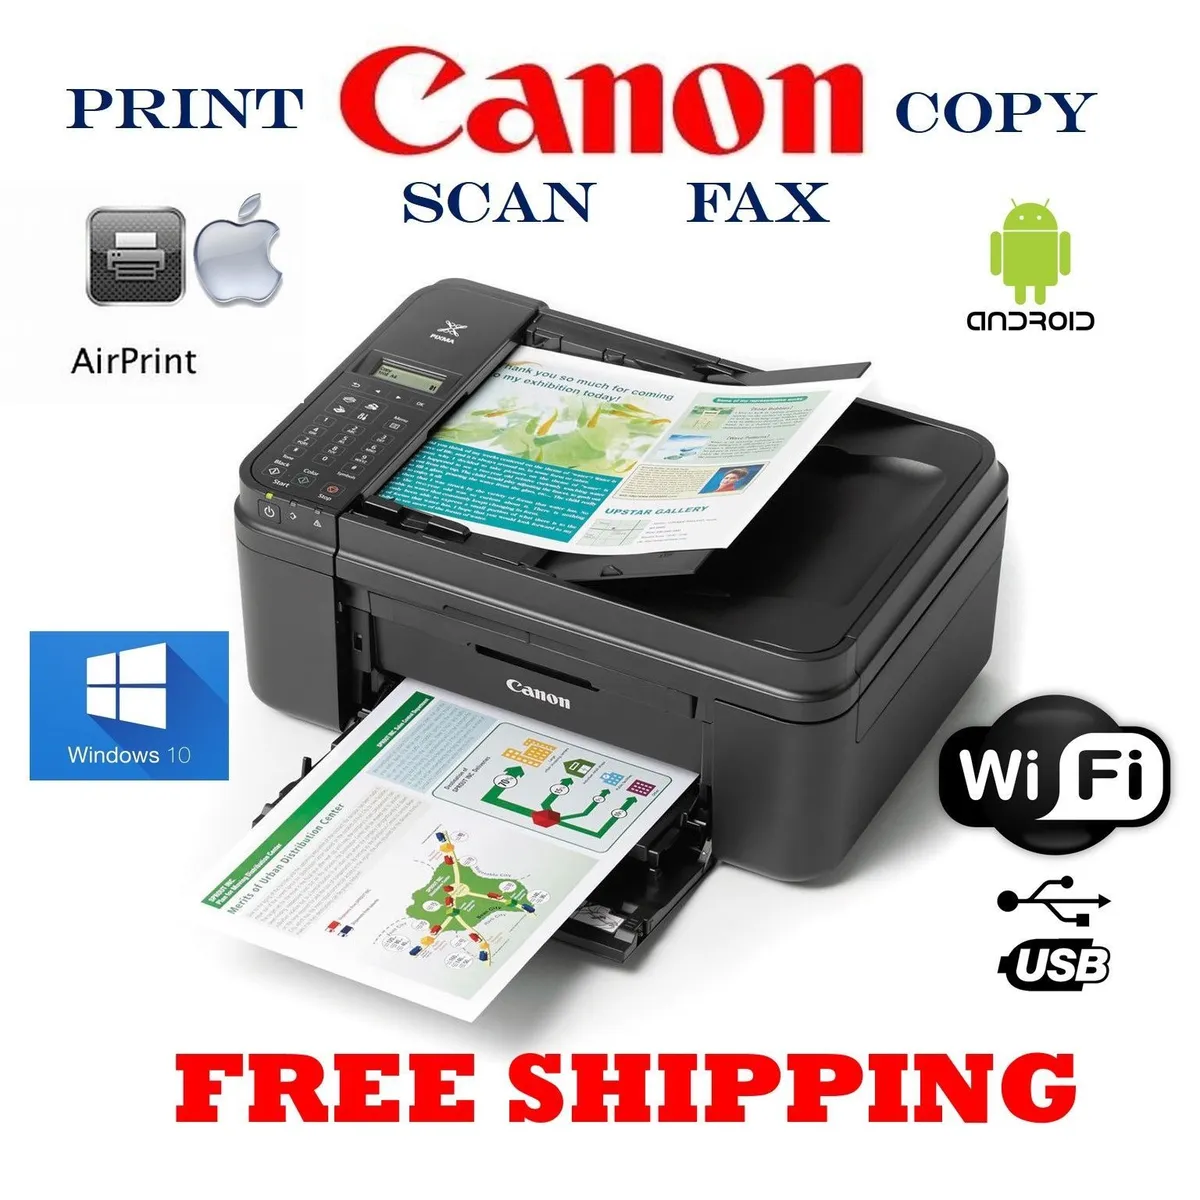 Scan copy. Скан факс сканер. AIRPRINT Printer. Canon copy scan. Office Copier Printer Scanner Fax.